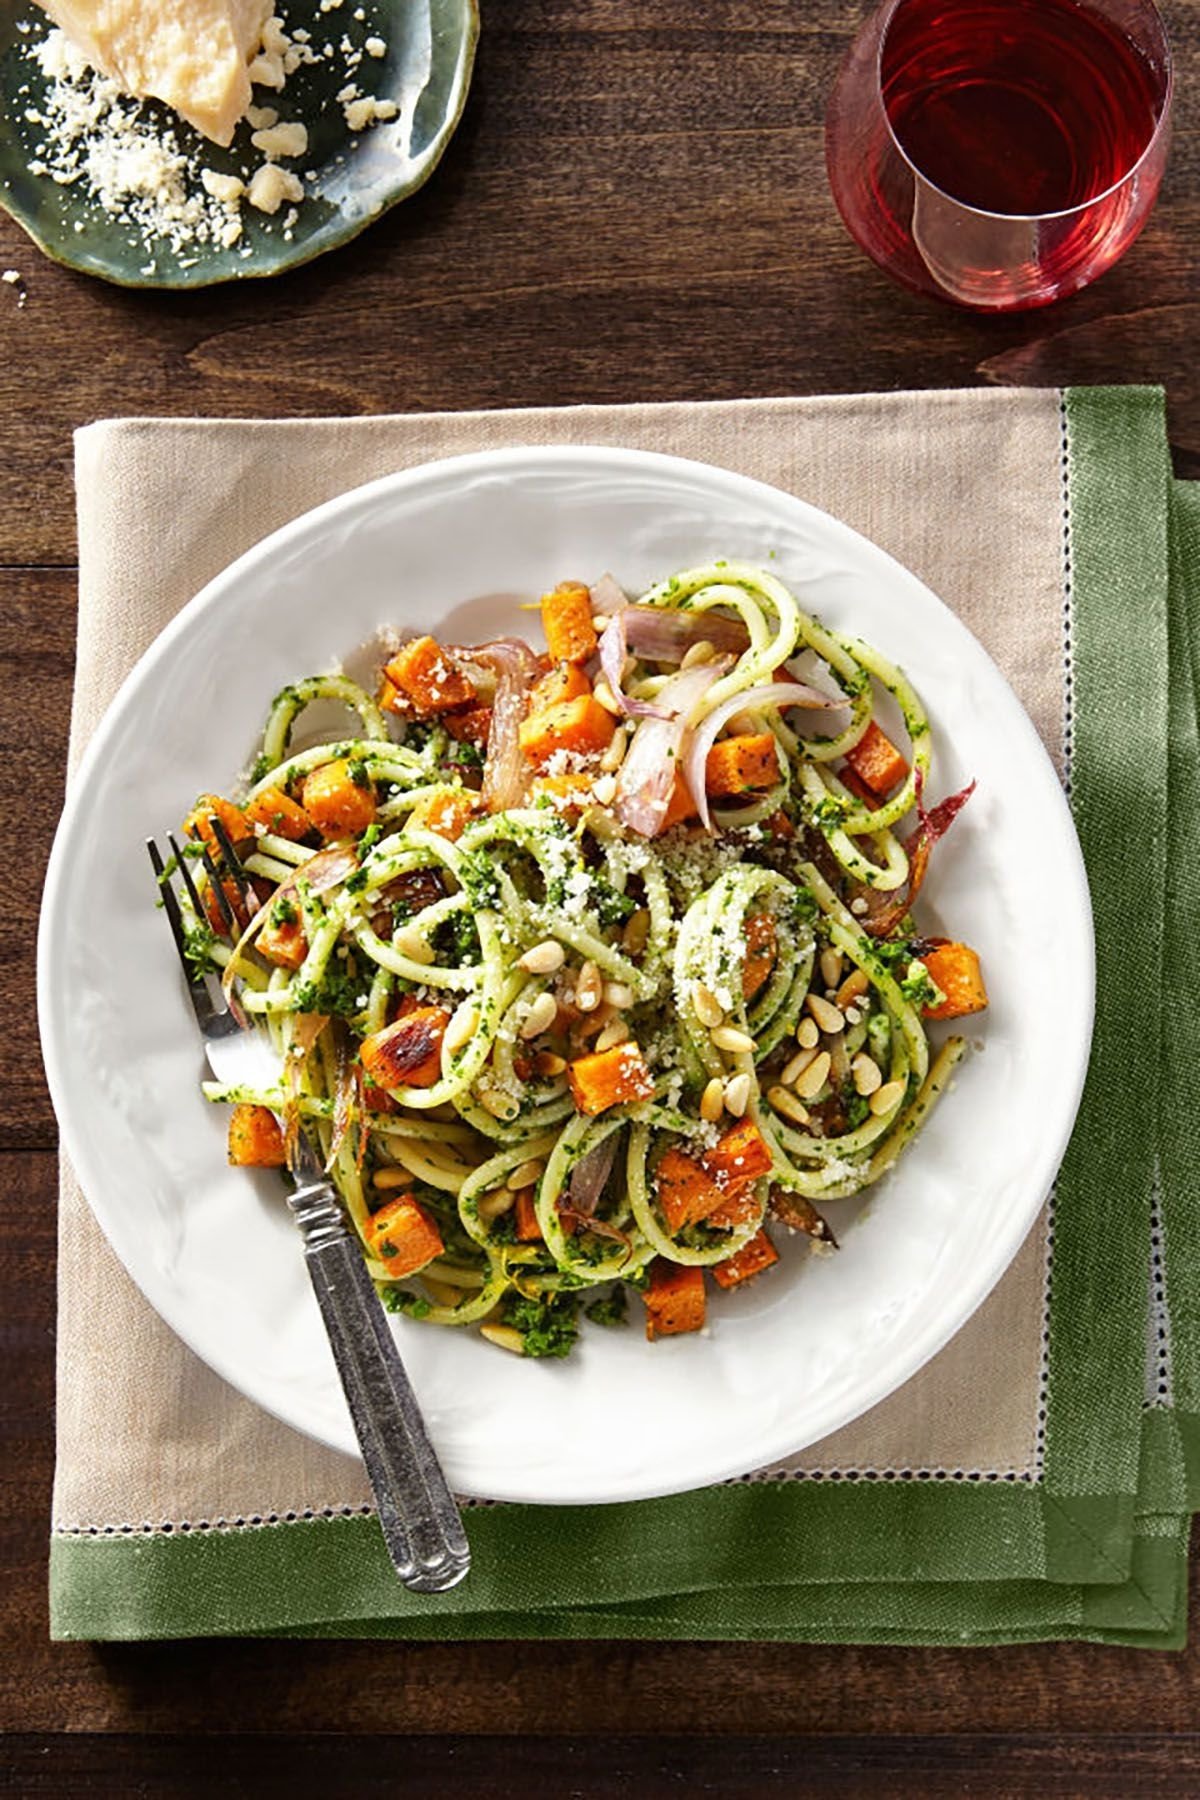 10 Amazing Vegetarian Dinner Ideas For Two 80 easy vegetarian dinner recipes best vegetarian meal ideas 1 2022